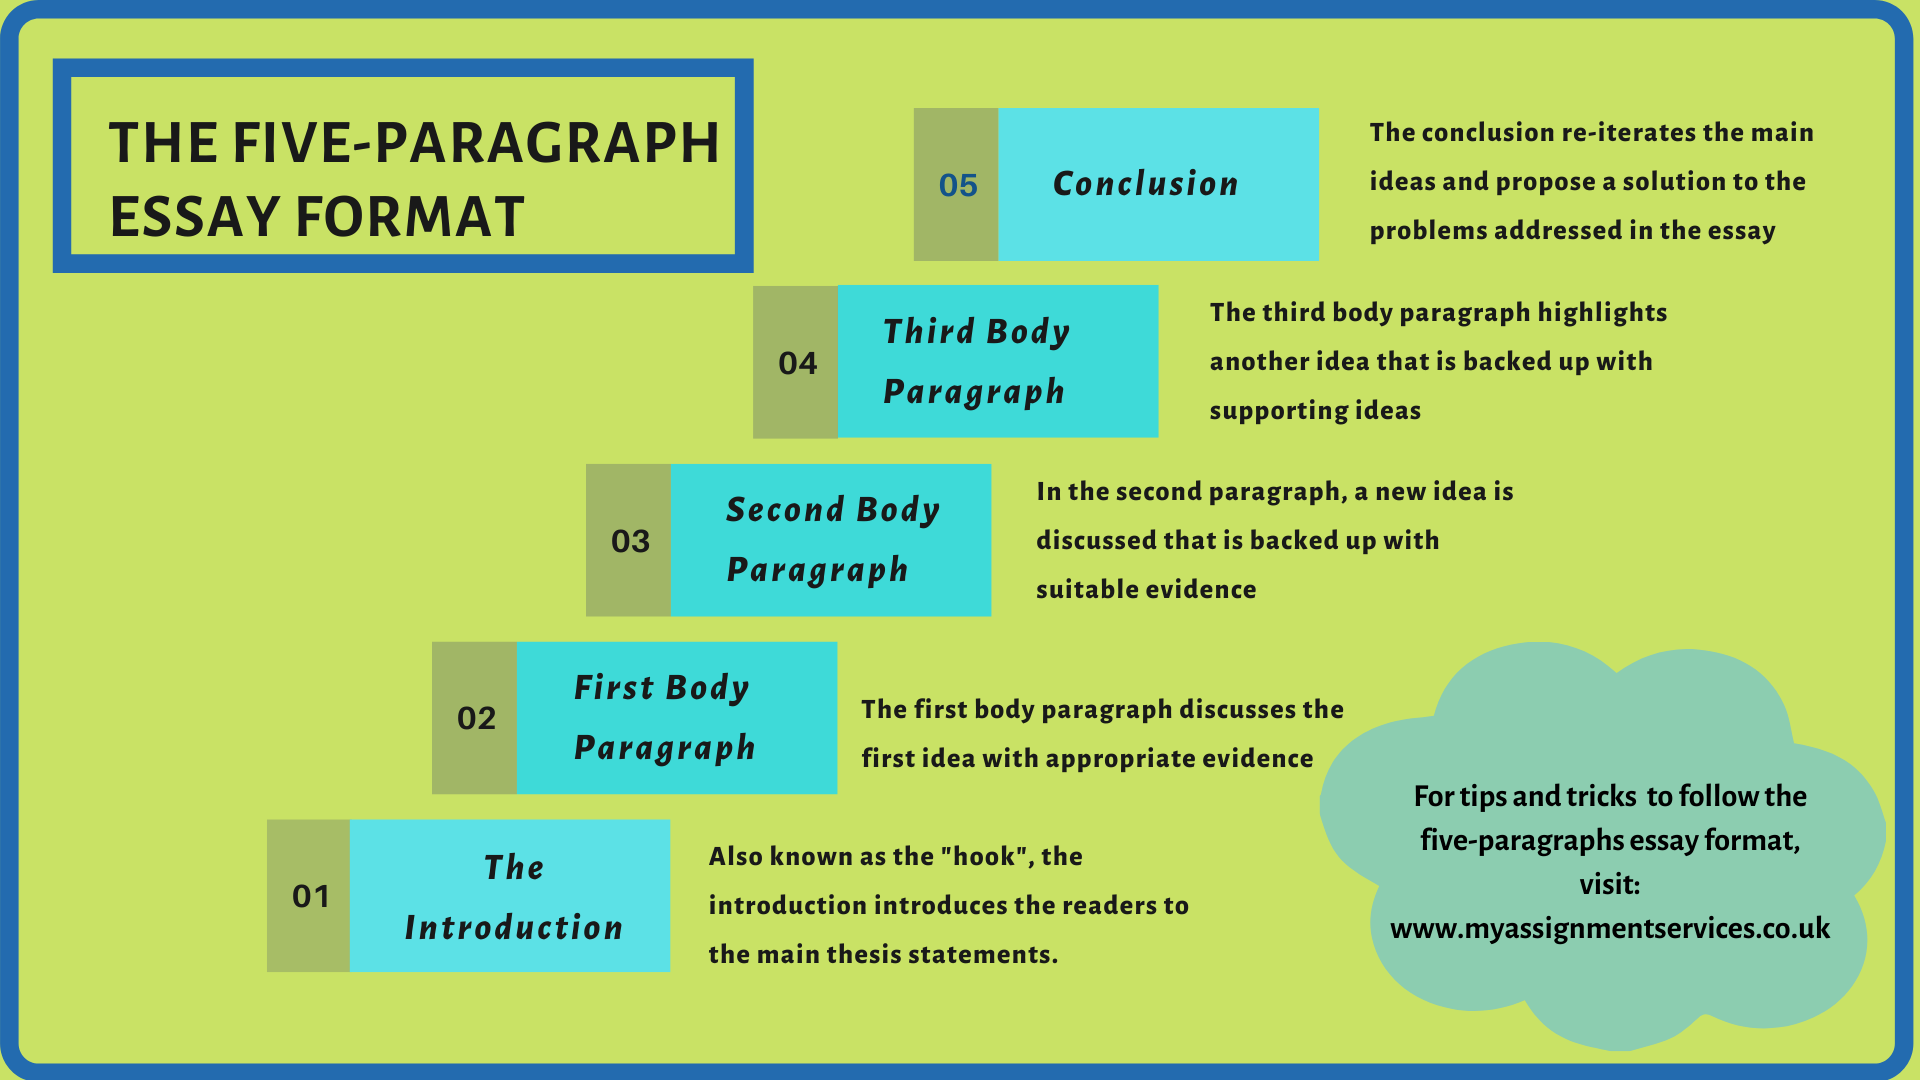 The Five-paragraph Essay Format